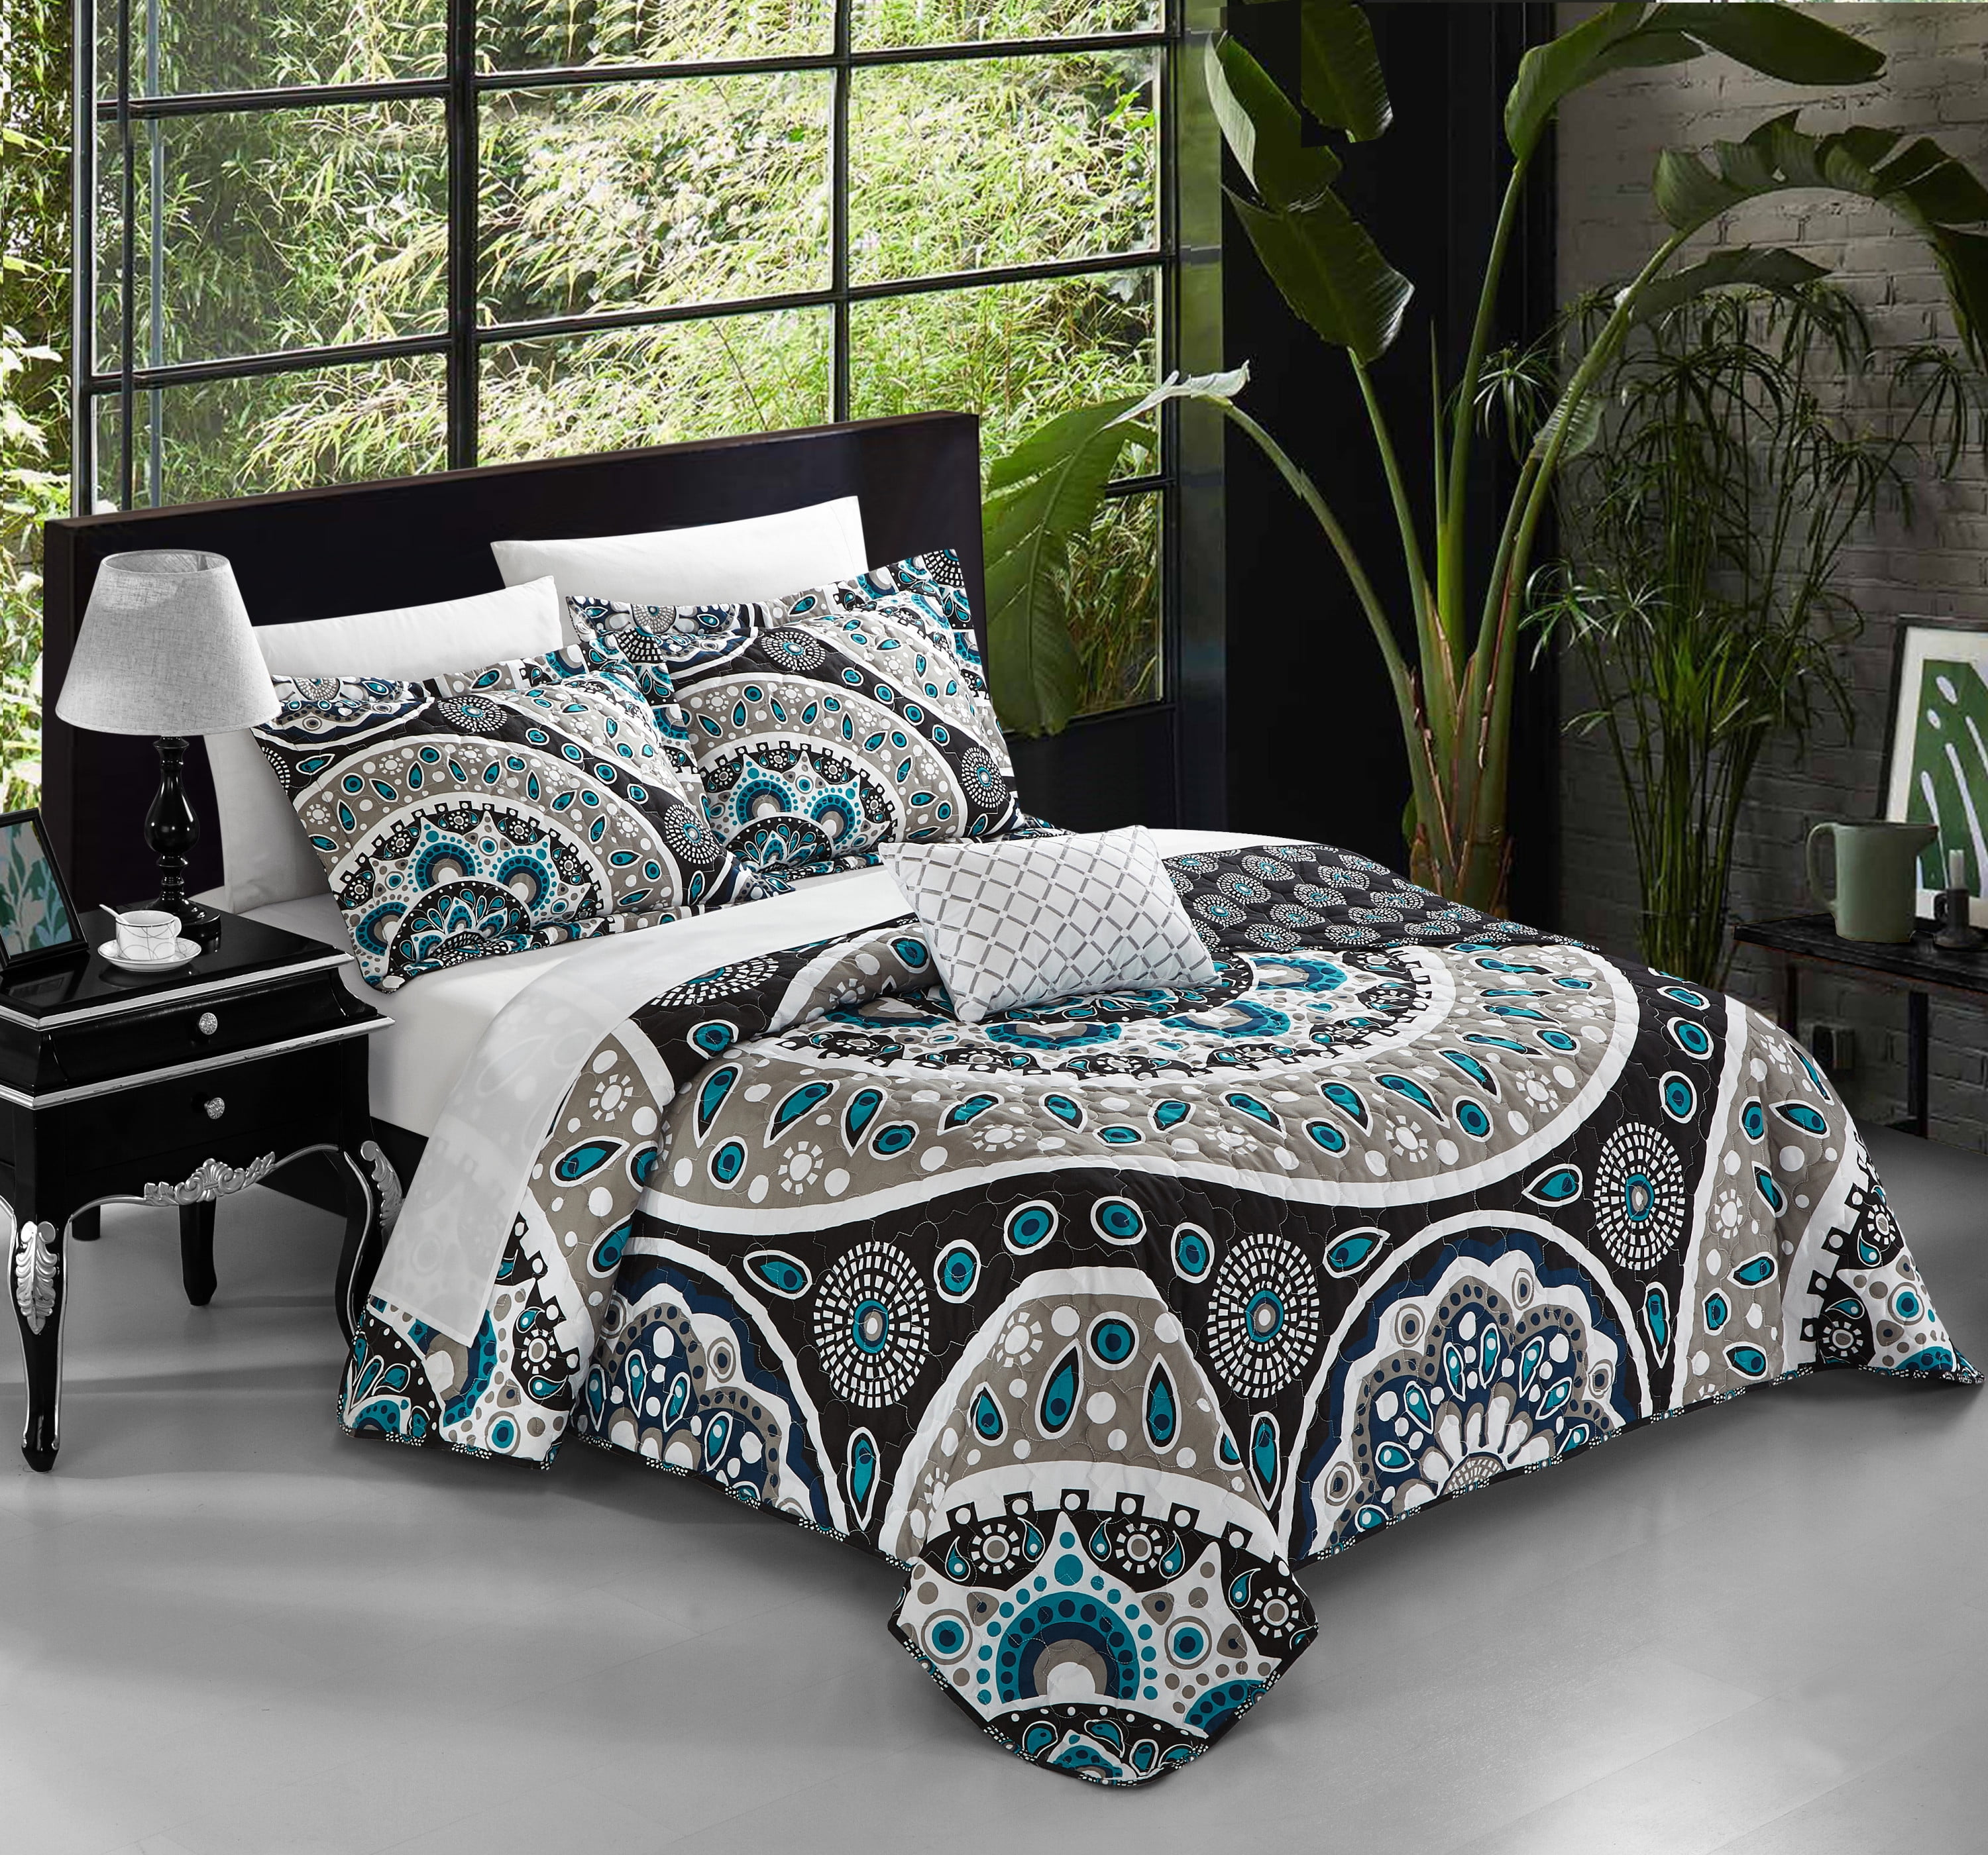 Details about   7-Piece Comforter Set with Black Grey Damask Pattern 